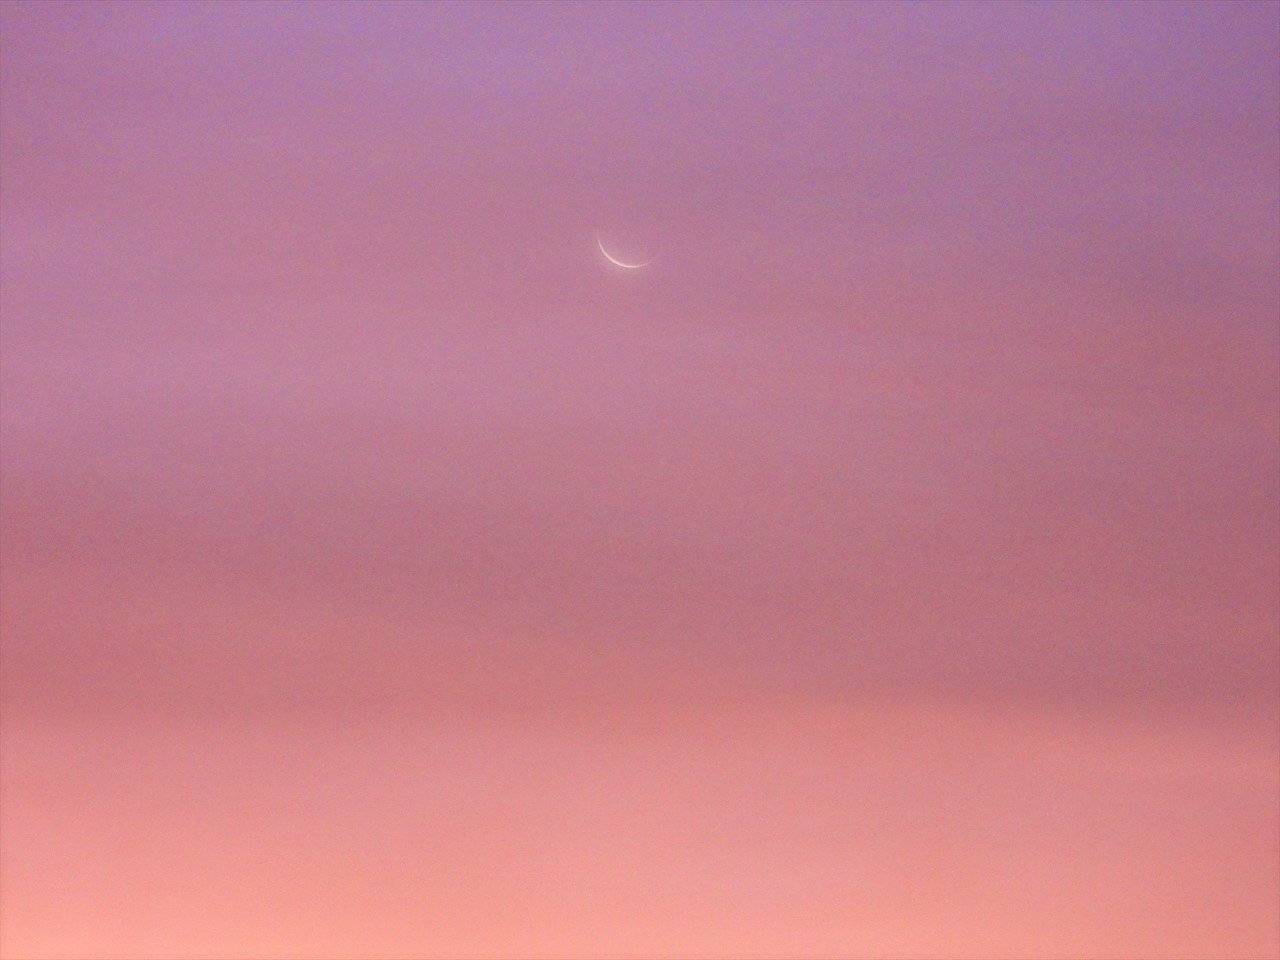 DSCN2779 (2)東の朝空に極細の、お月さん２０２２年１１月２２日AM６：２０